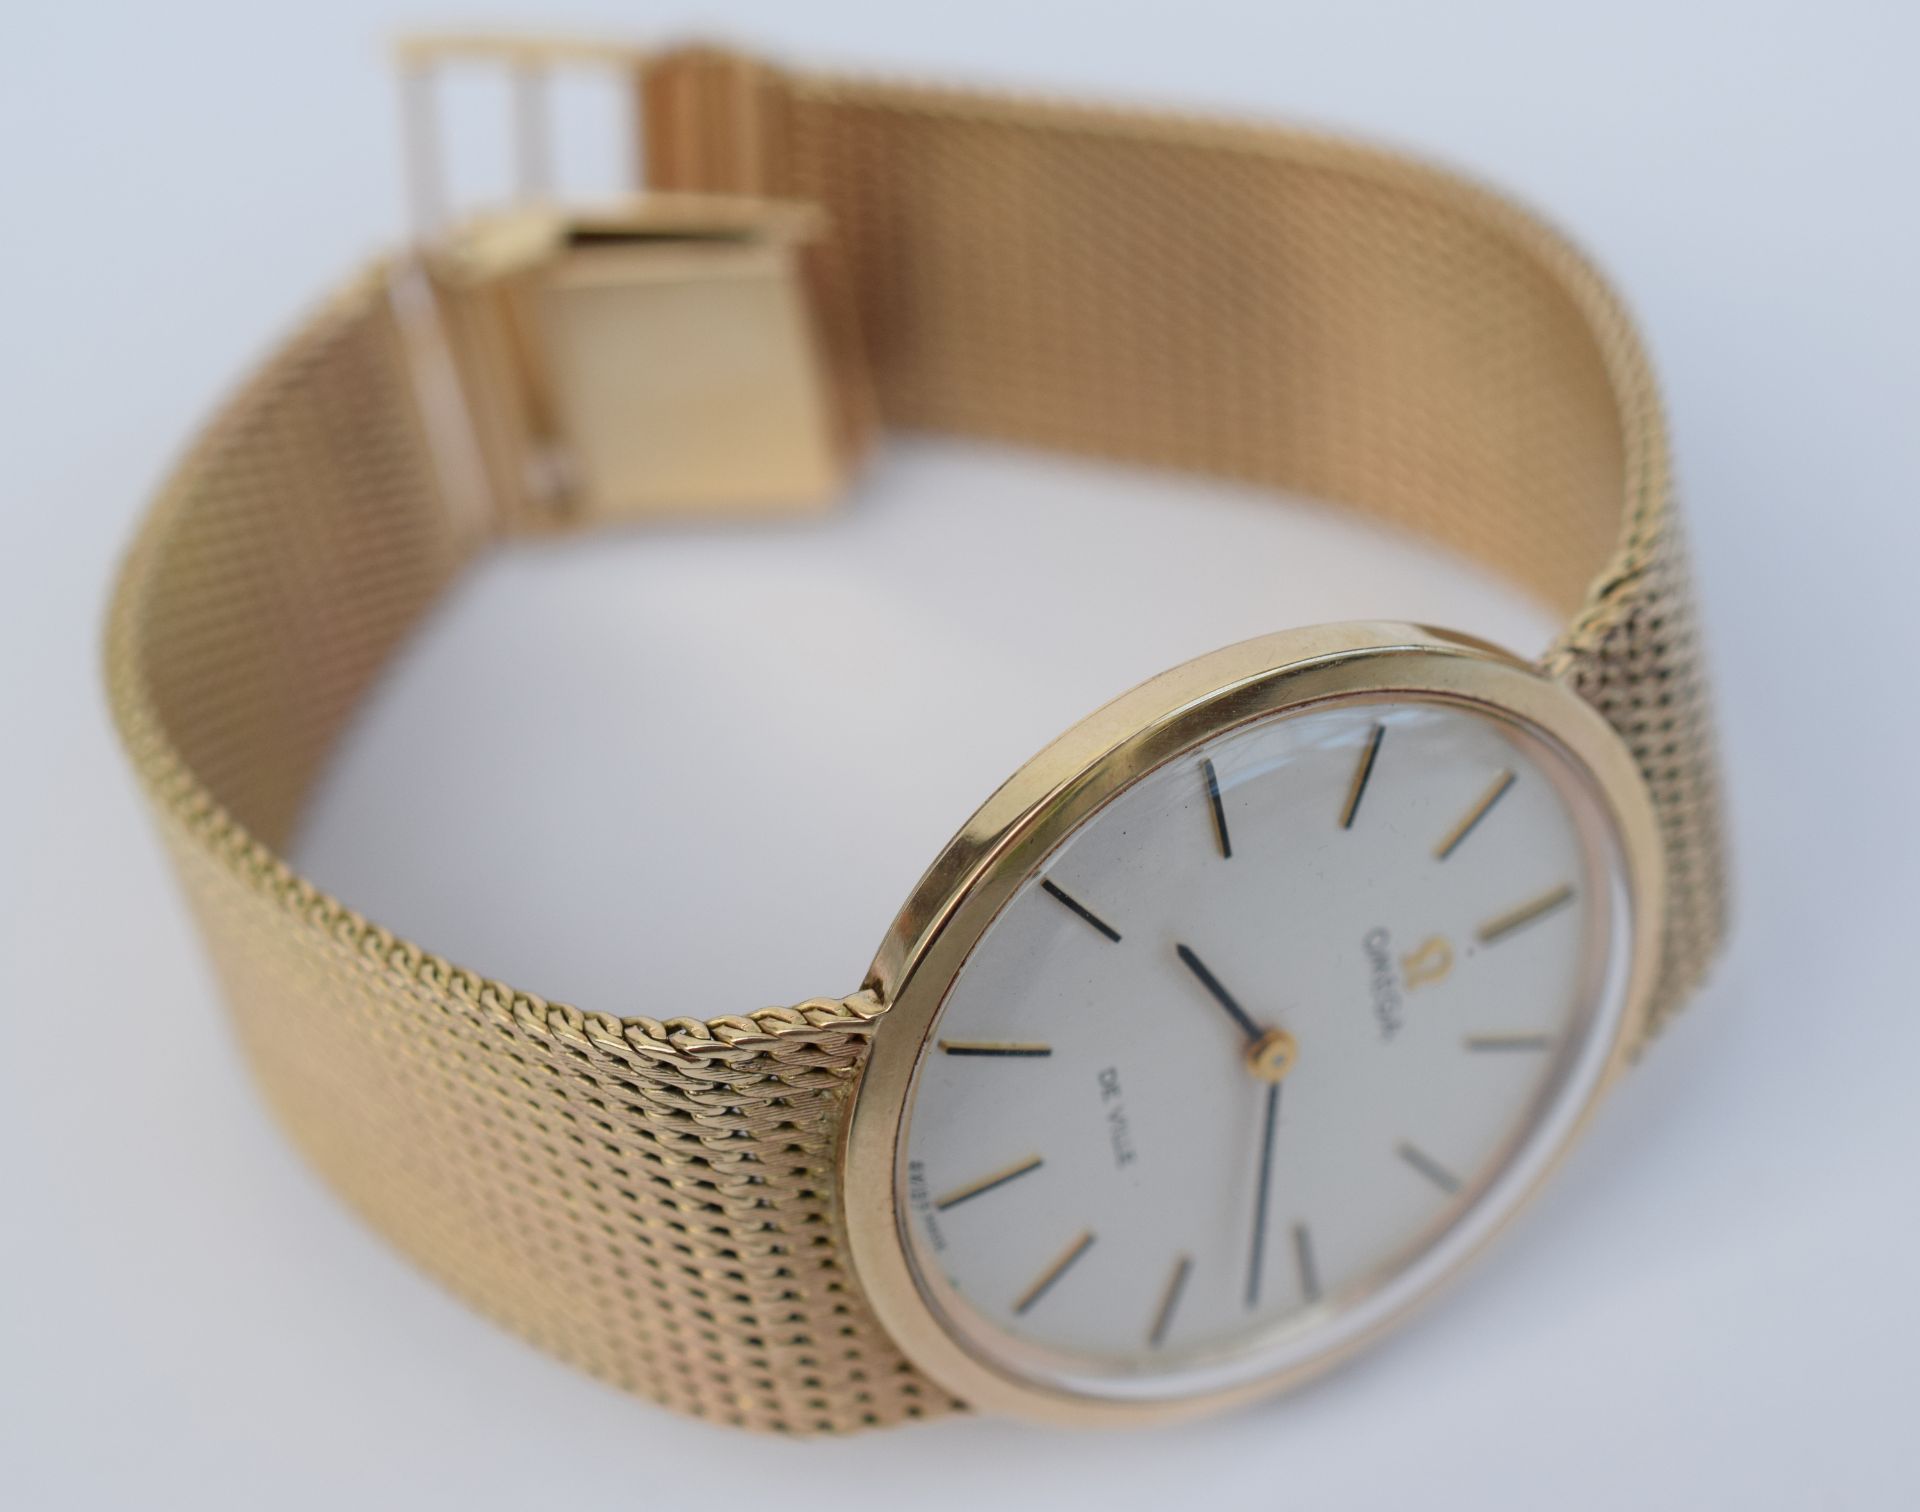 9ct Gold Omega De Ville Gentleman's Wristwatch On 9ct Solid Gold Bracelet**reserve lowered 8.10.16** - Image 12 of 13